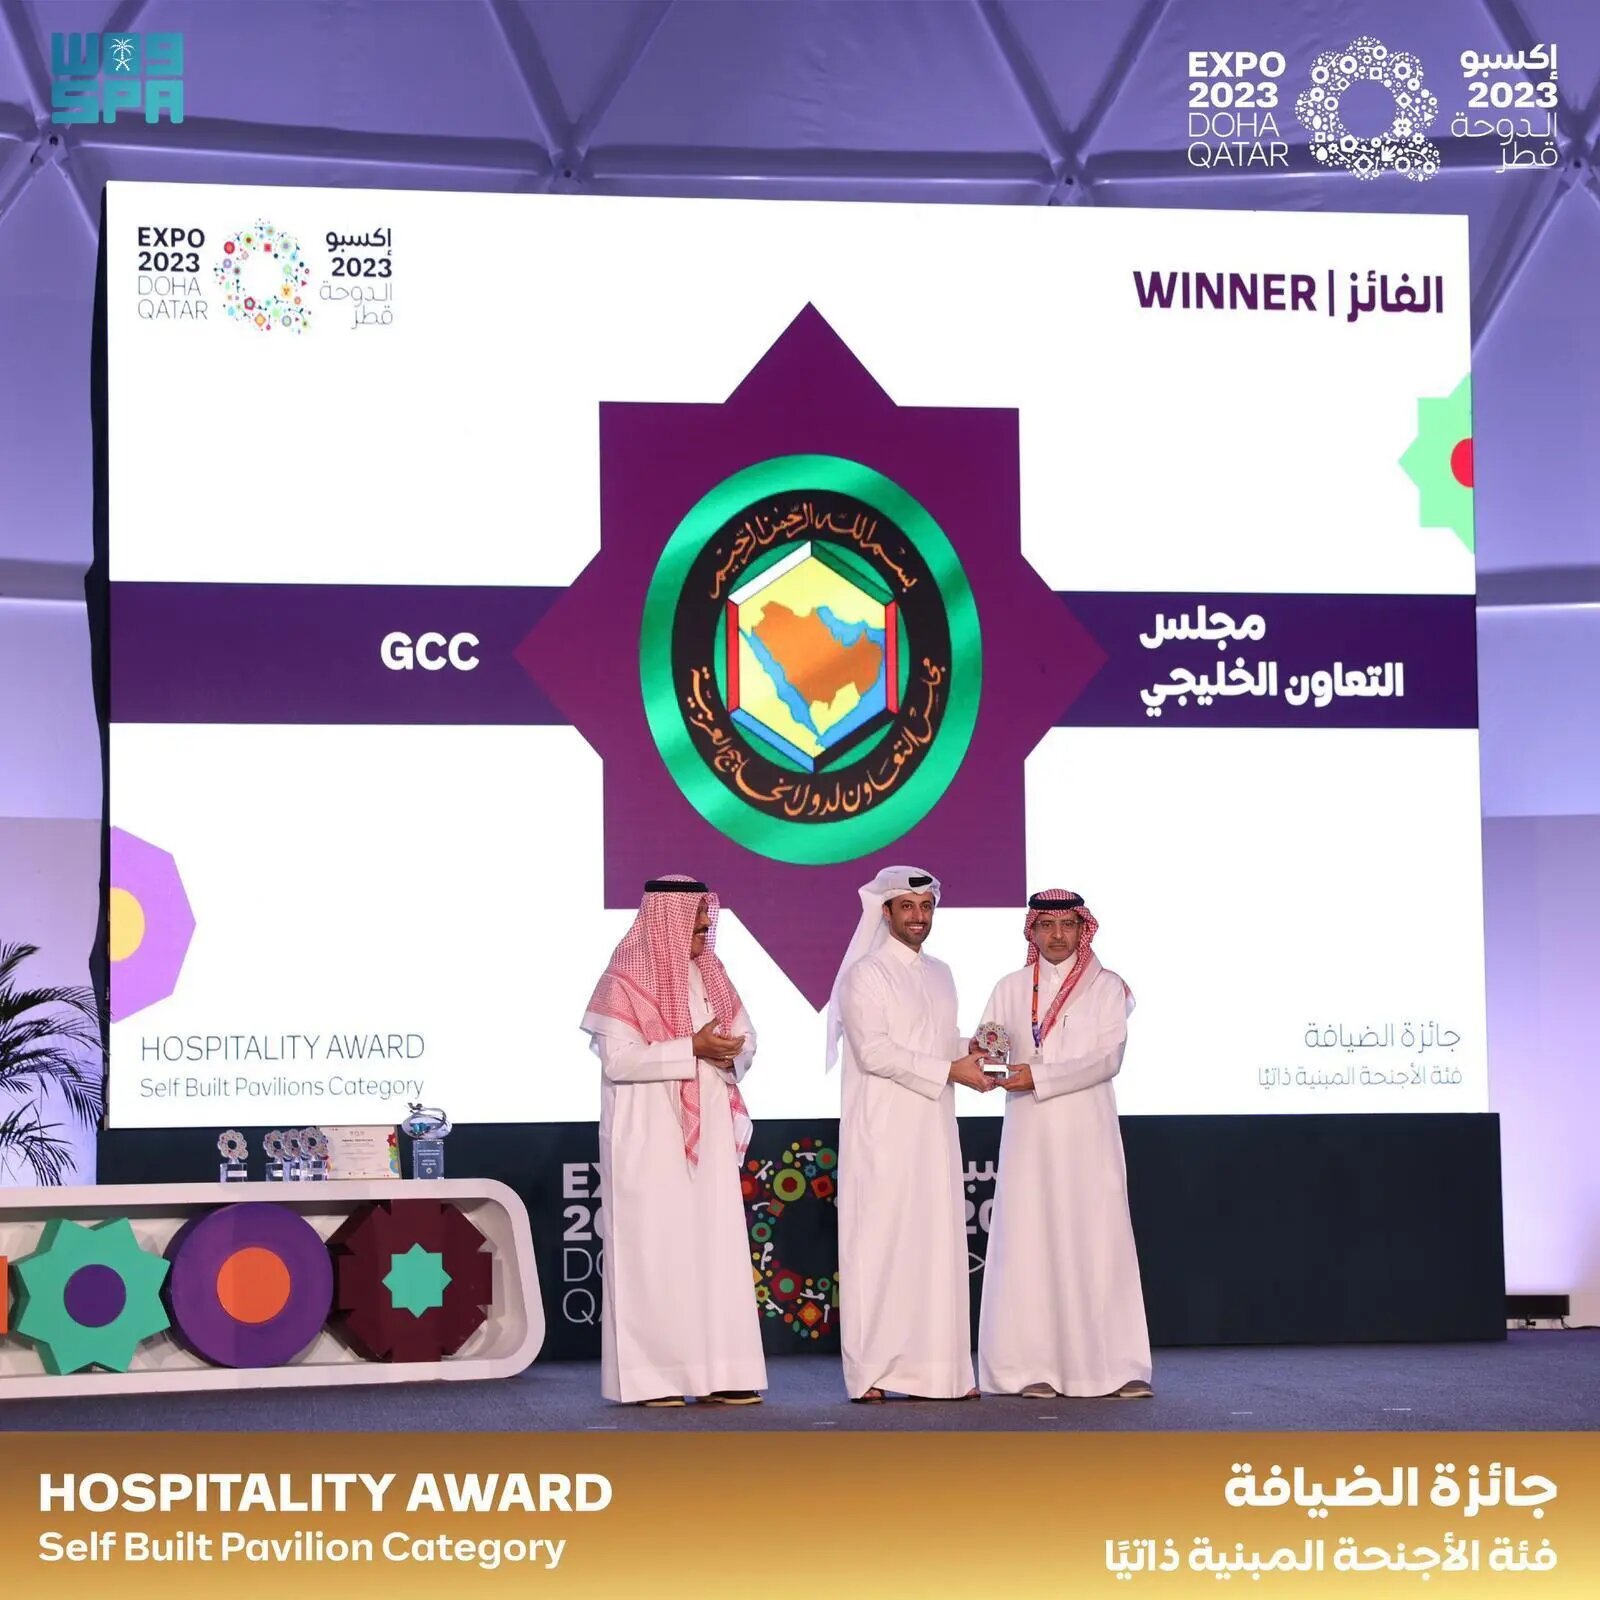 GCC Horticulture Pavilion Wins Hospitality Award at Expo 2023 Doha